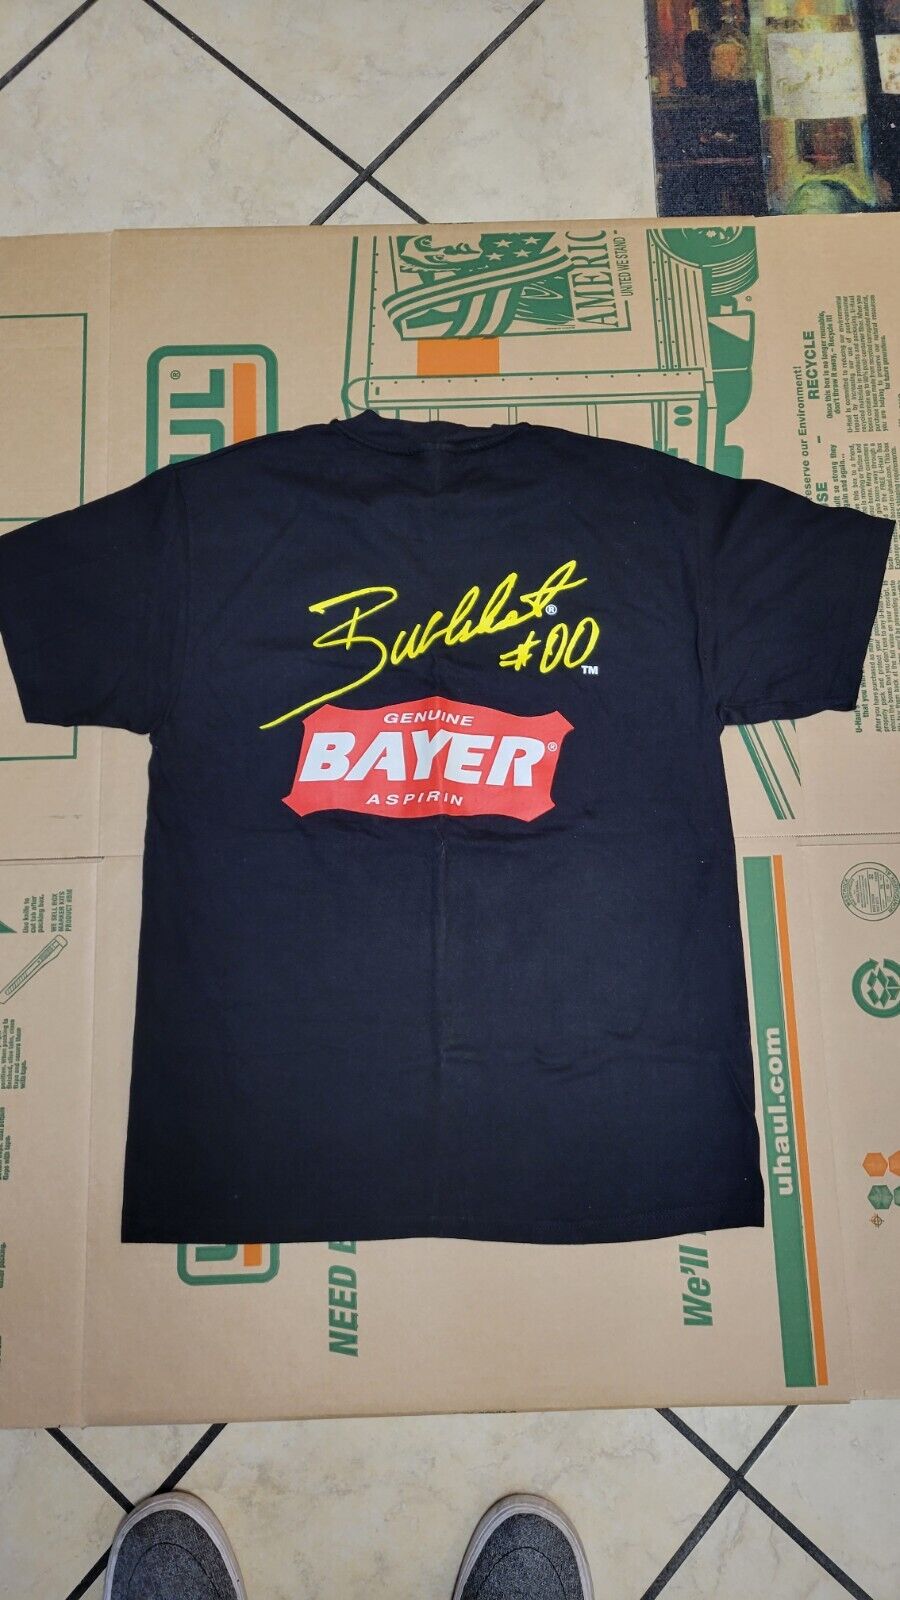 Buckshot Jones #00 BAYER RACING T-Shirt Large Bla… - image 1